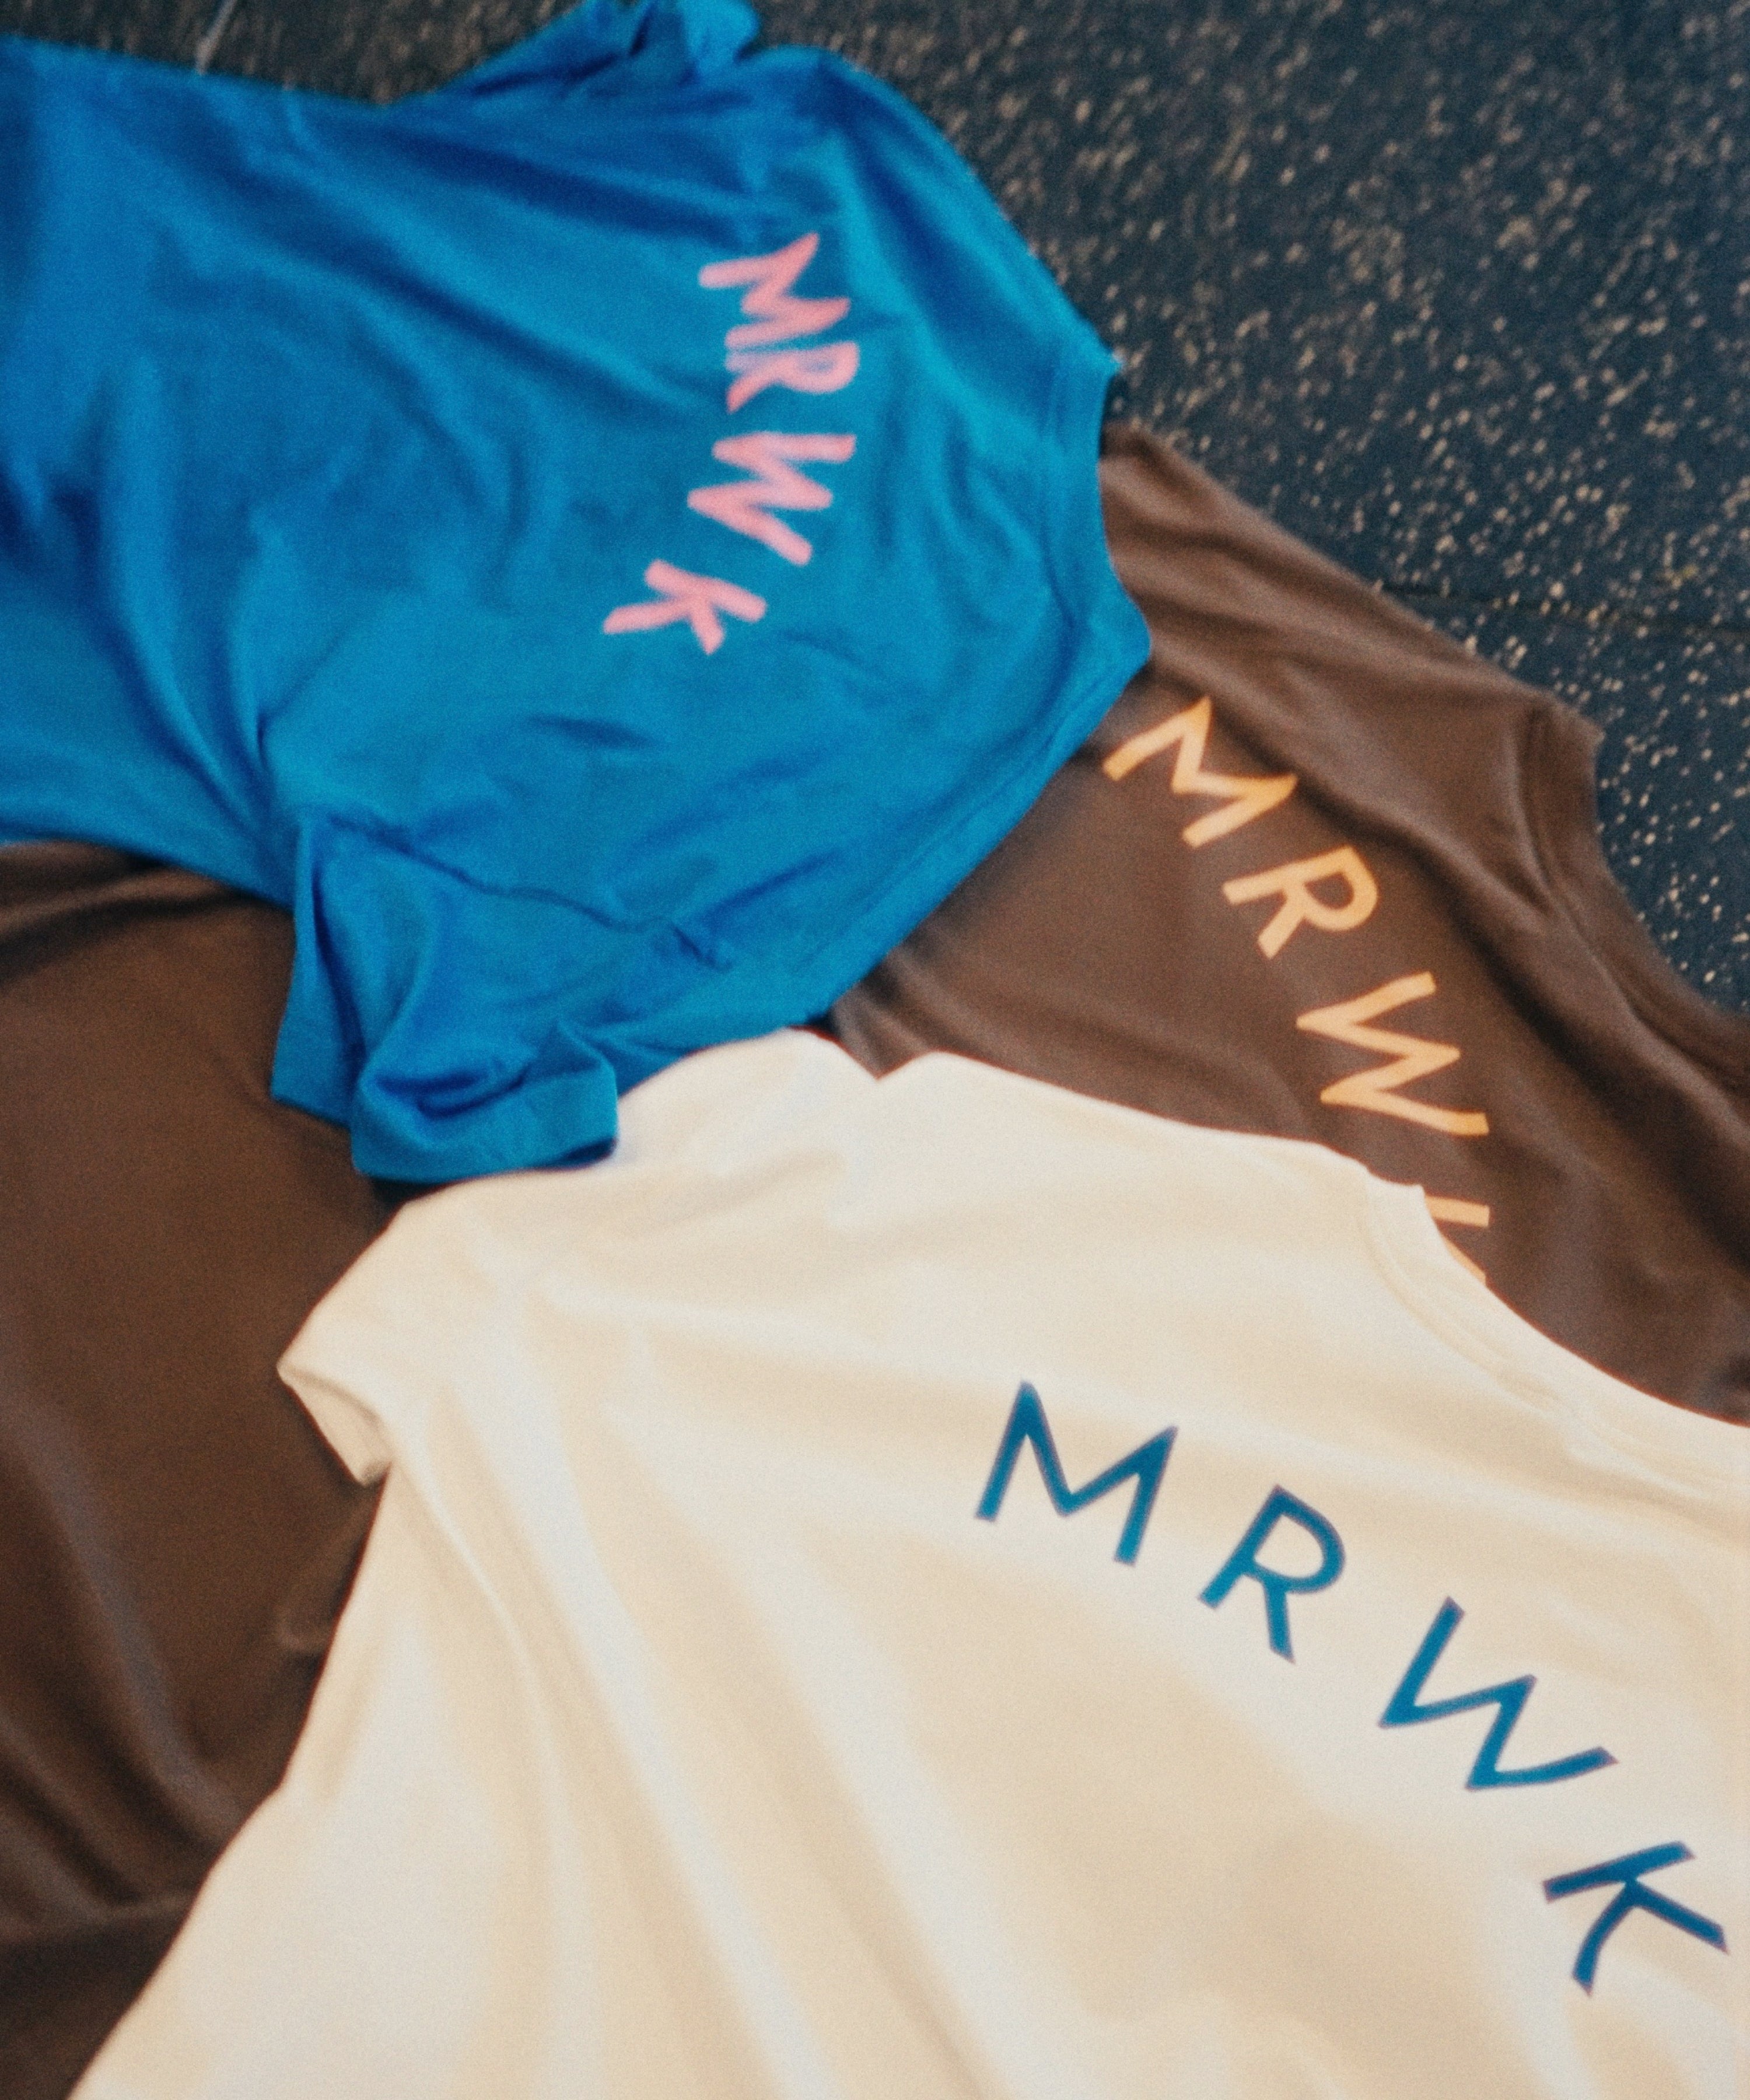 MRWK BROWN T-Shirt